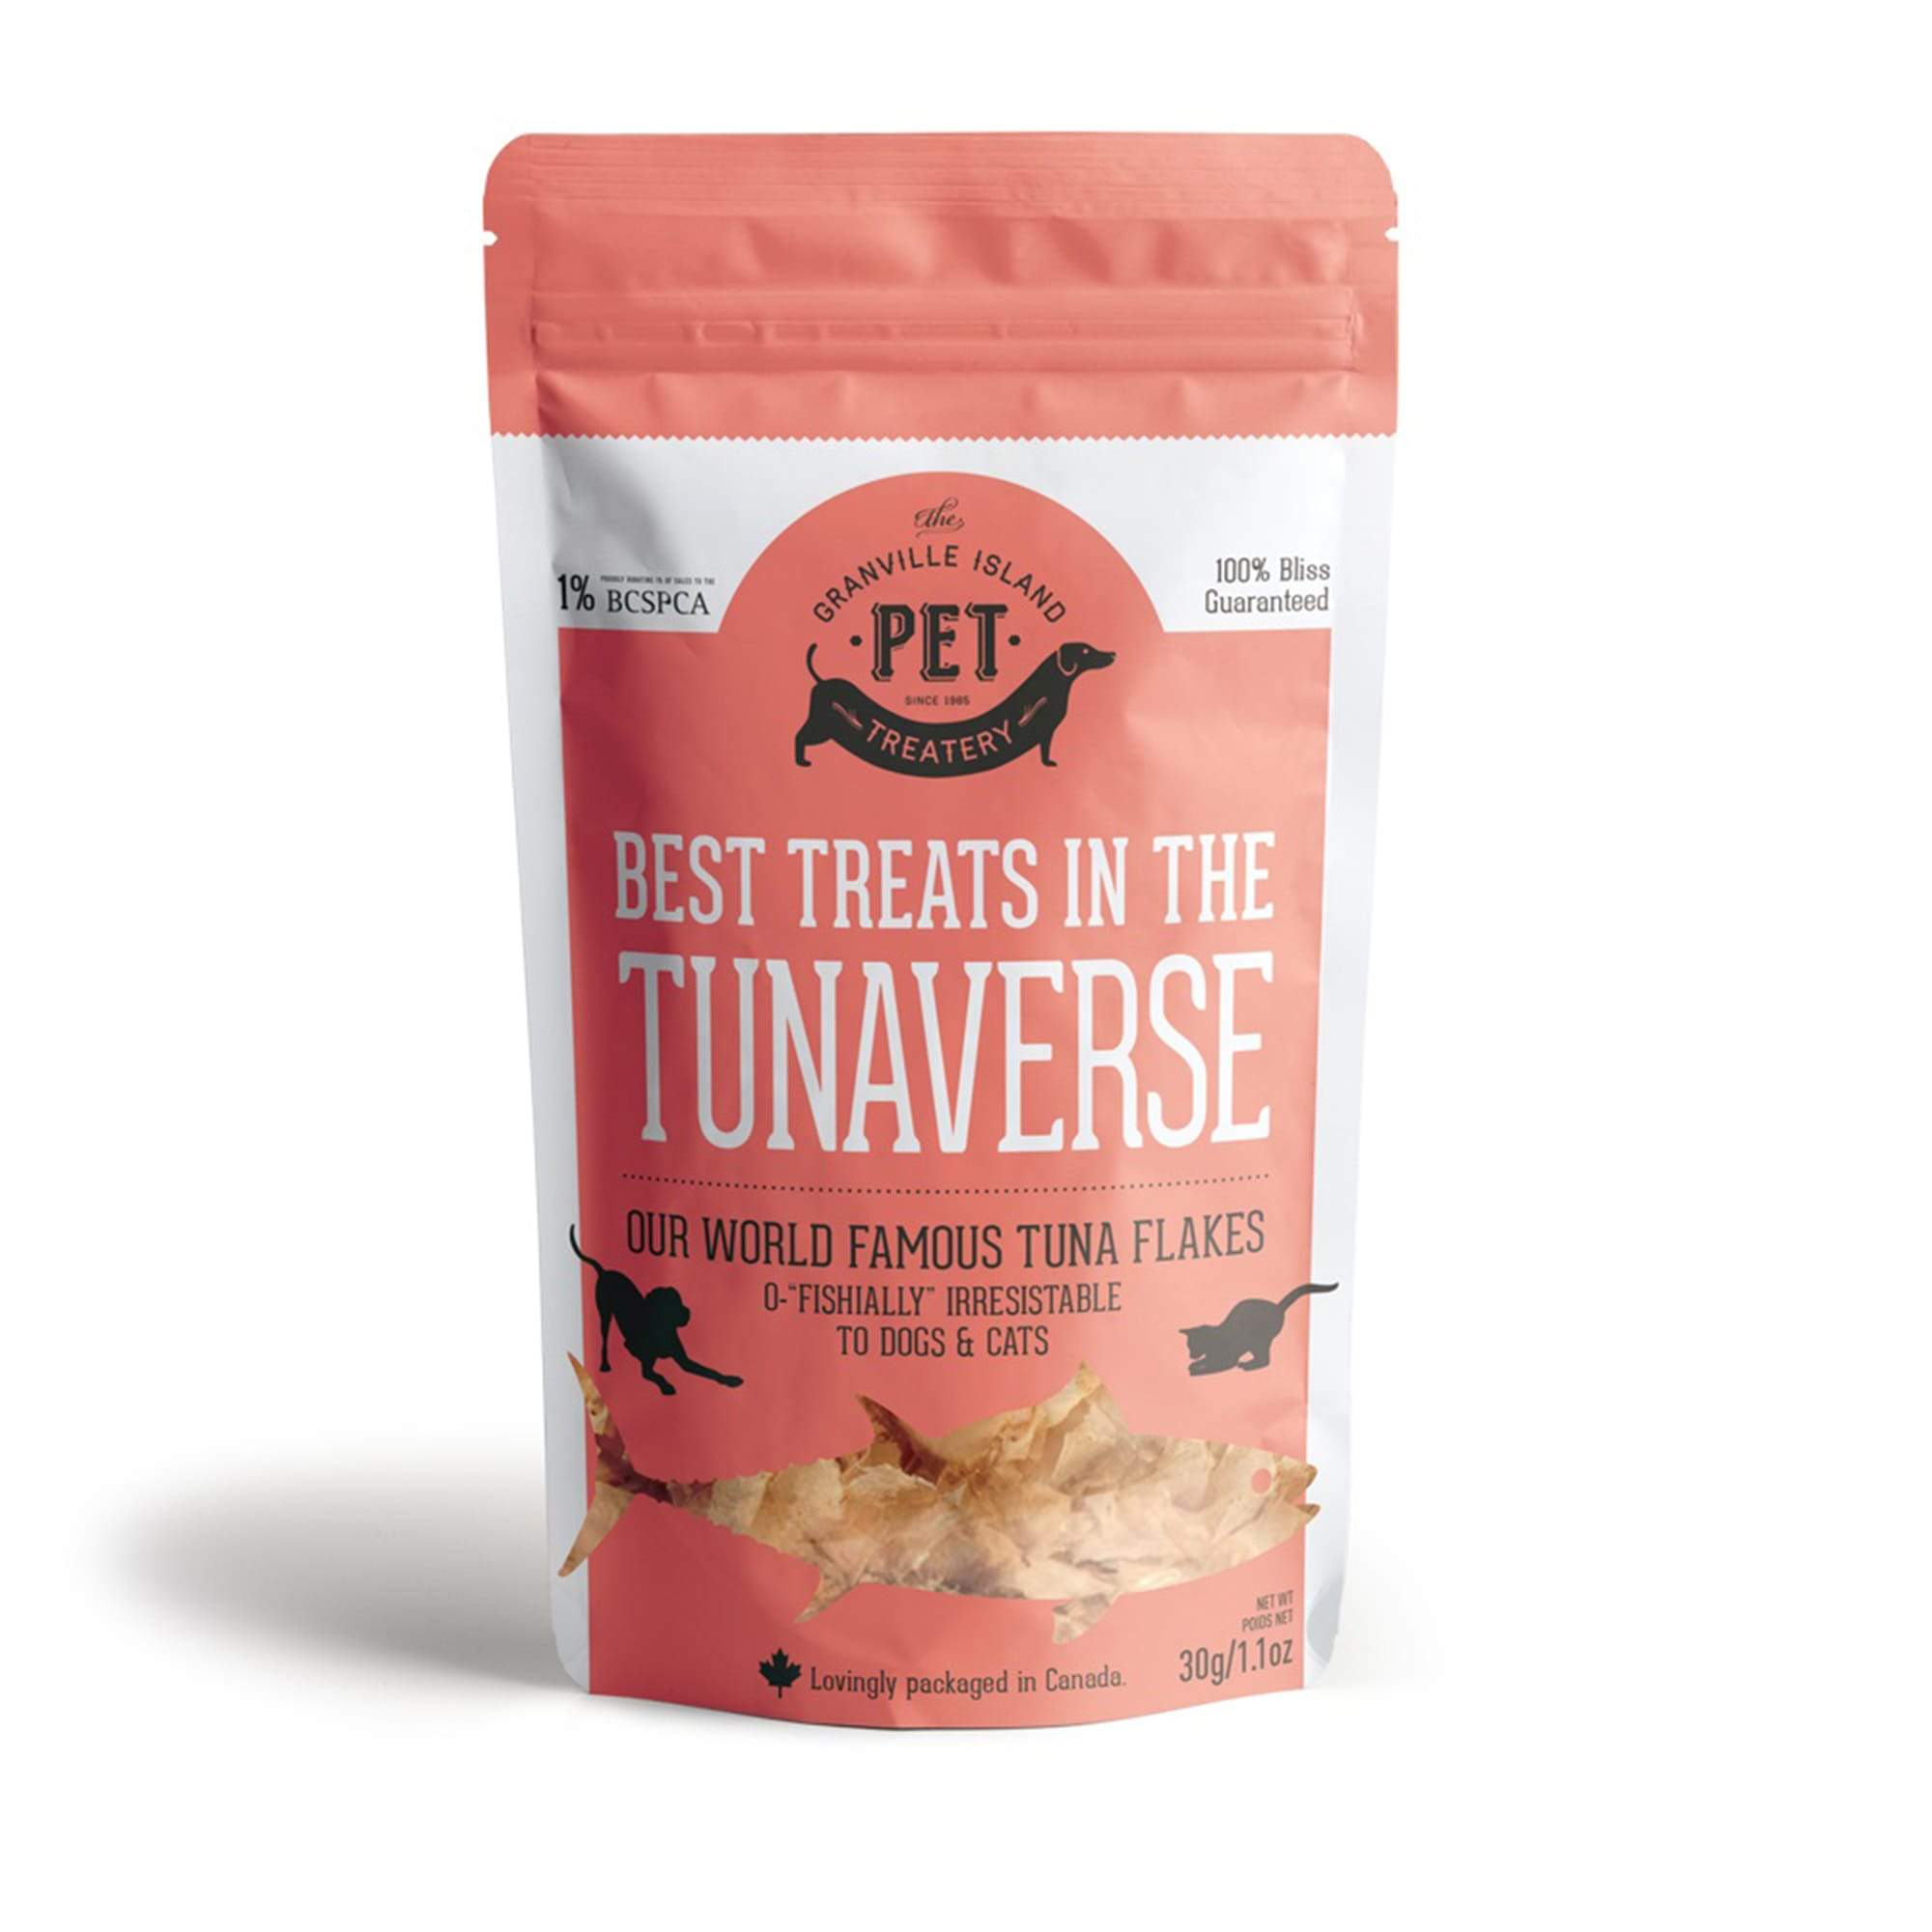 Granville Island Pet Treatery Tuna Flakes Dehydrated Dog and Cat Treats - Standard 1.1 oz Bag  